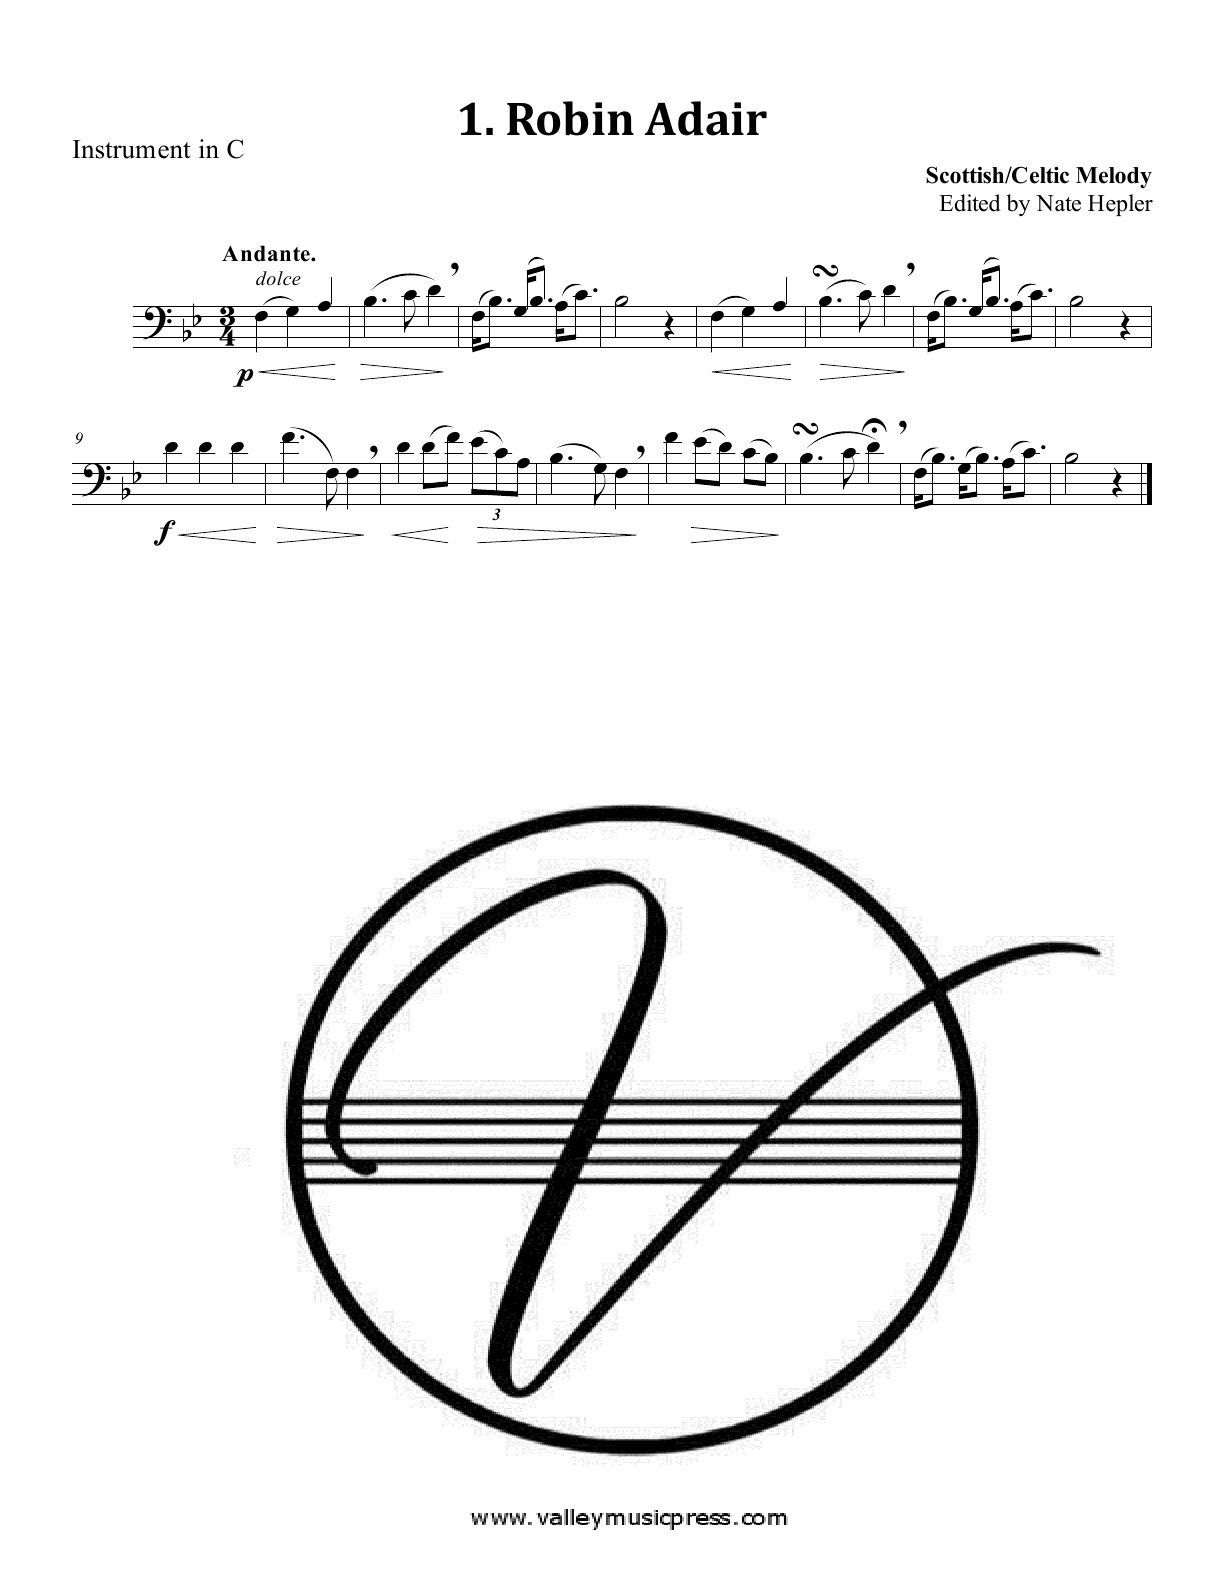 Arban Art of Phrasing Piano Accompaniment Vol. 2 No. 26-50 (Trb)